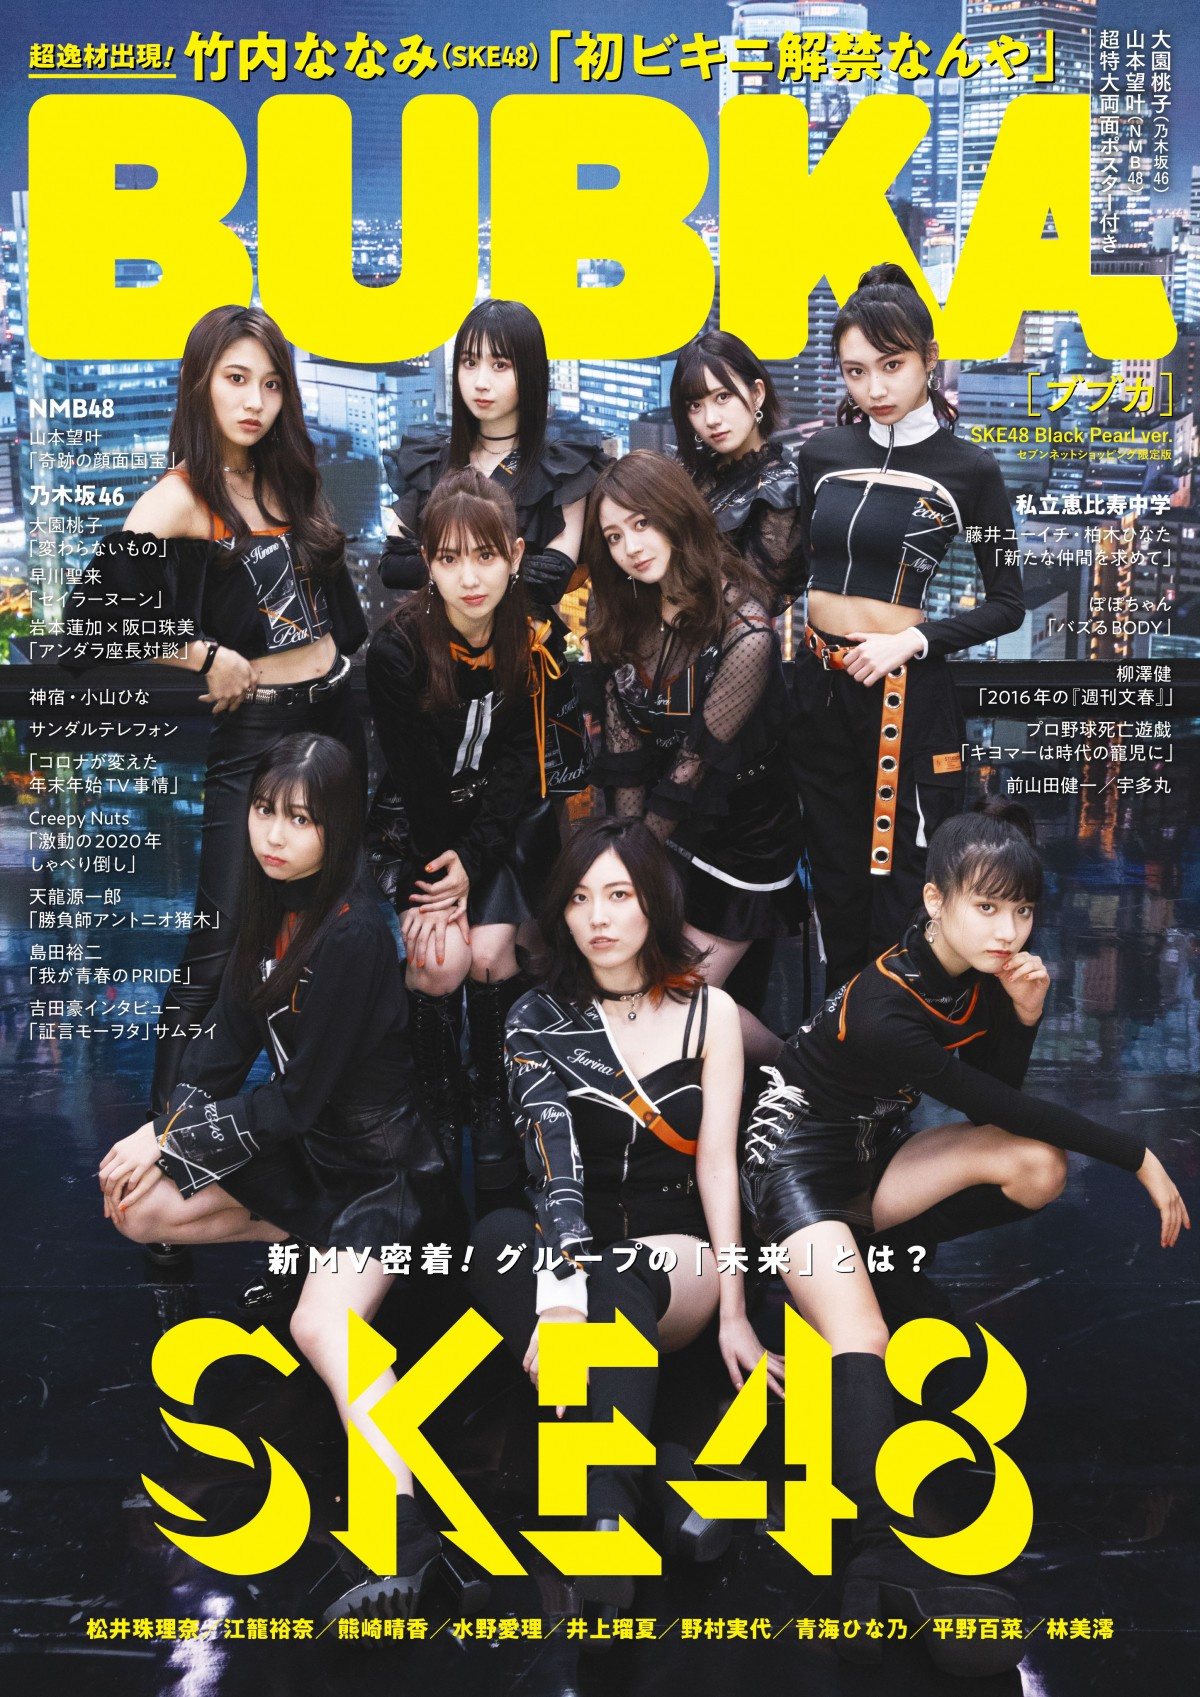 Ske48新ユニット Blackpearl の魅力に迫る Bubka 限定版表紙 密着取材 Oricon News